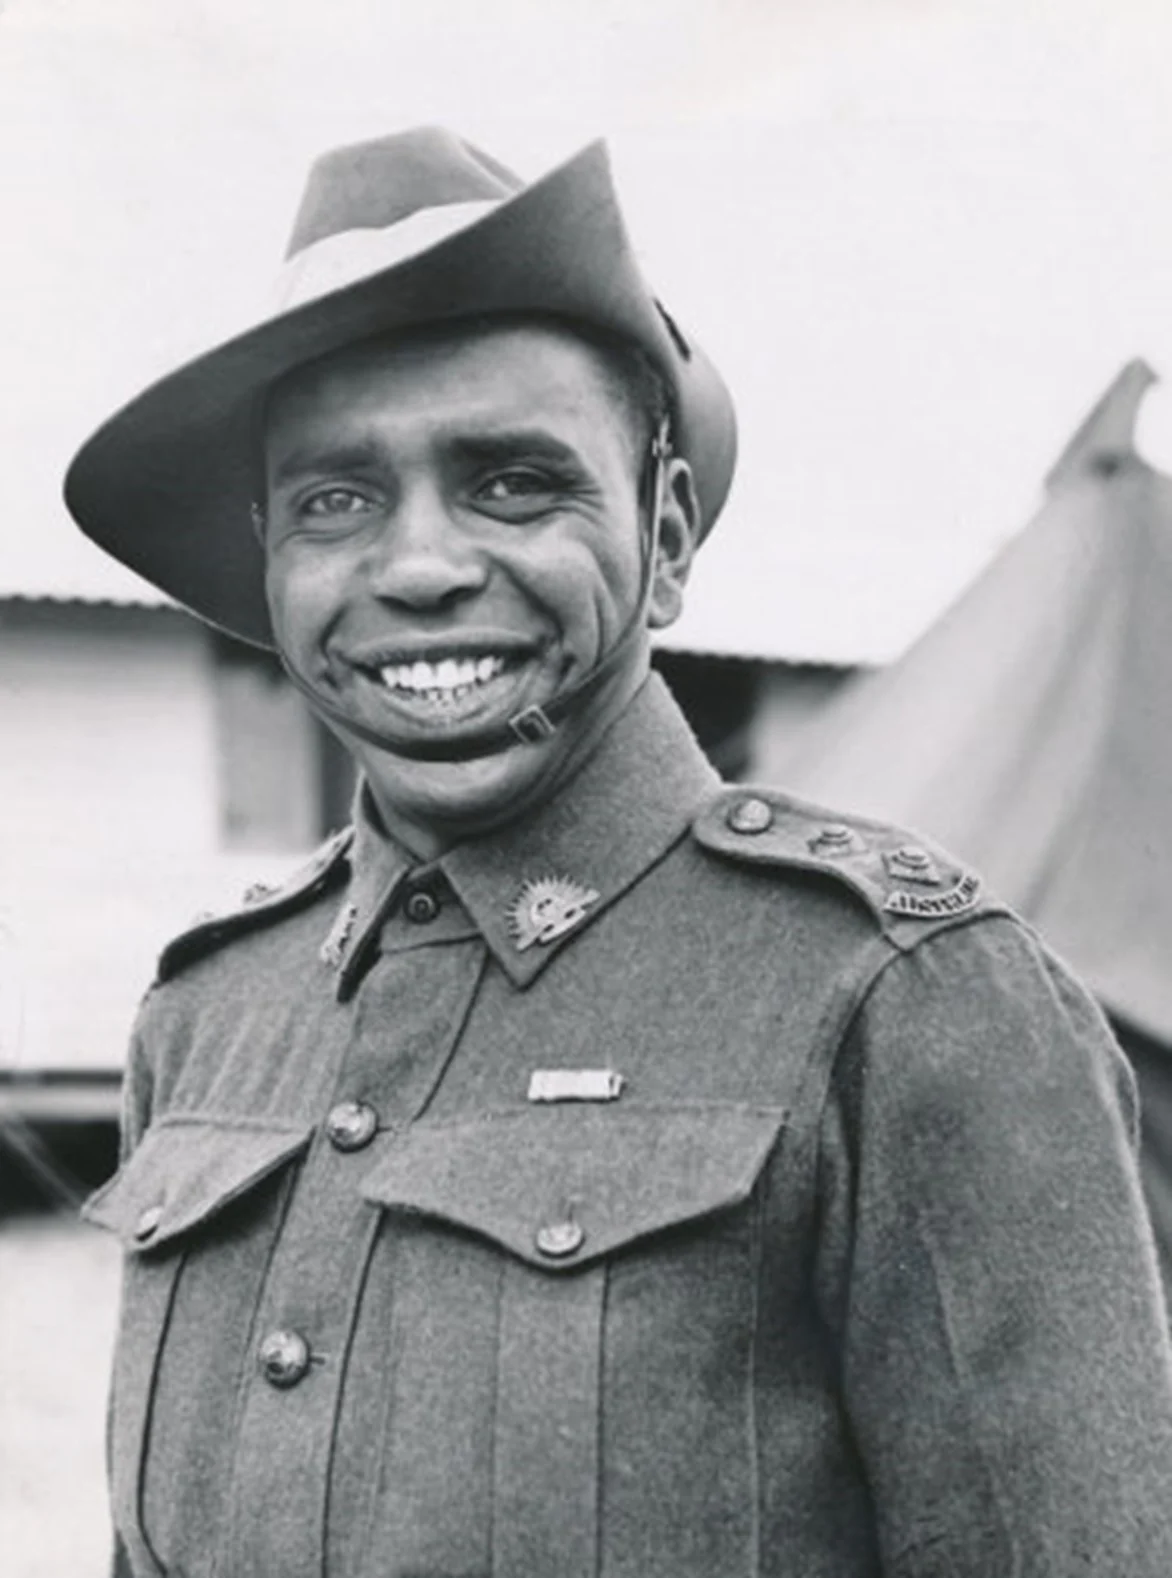 PHOTO 15 – Captain Reginald Saunders in uniform. Photo by Australian War Memorial.